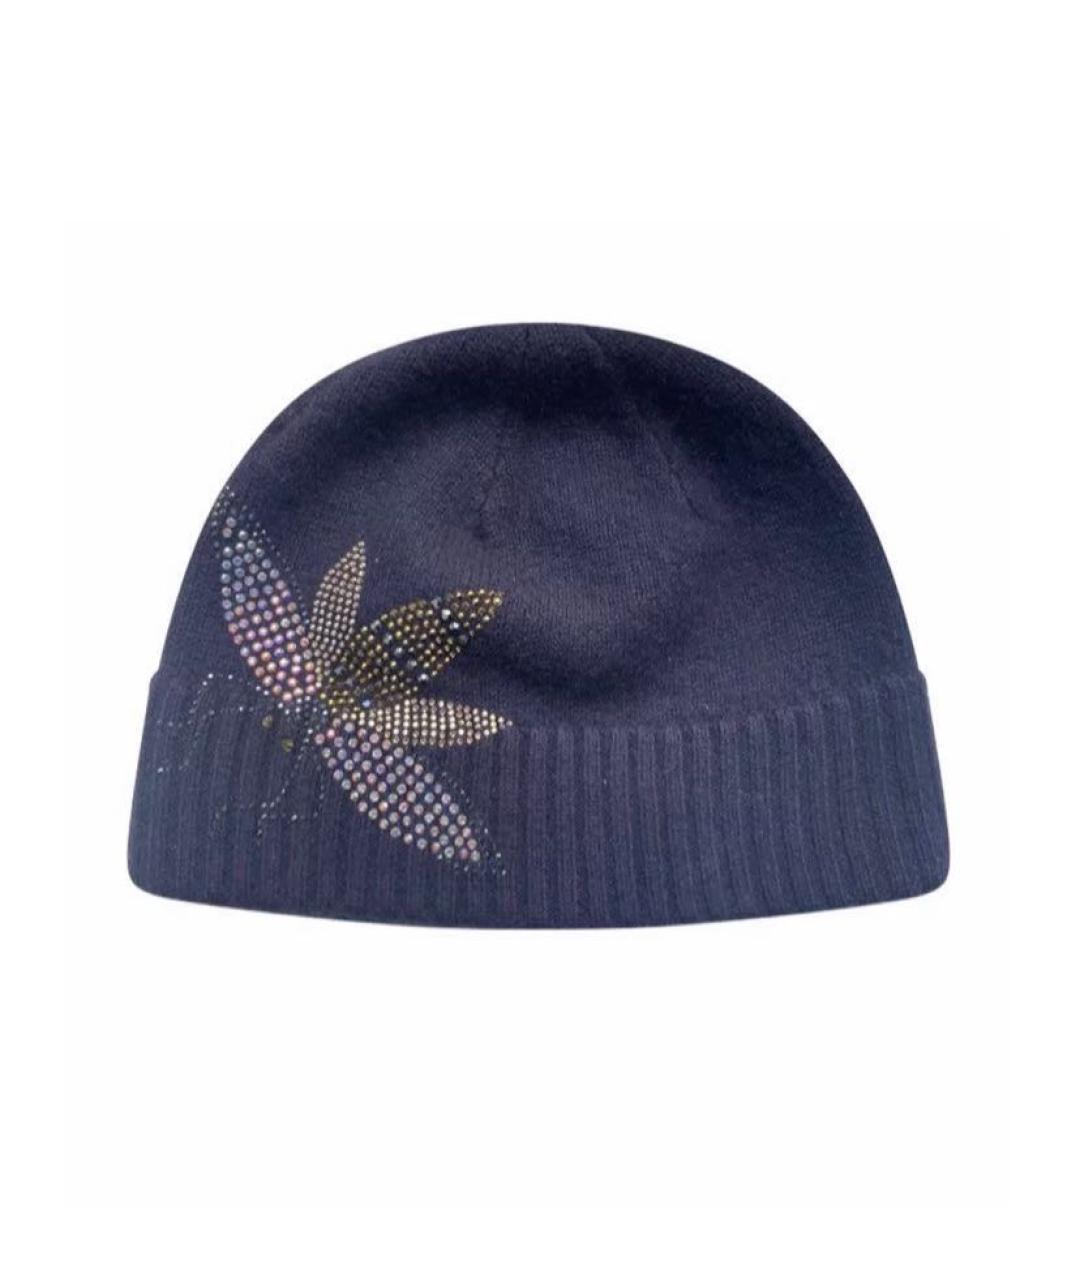 WILLIAM SHARP Темно-синяя кашемировая шапка, фото 1